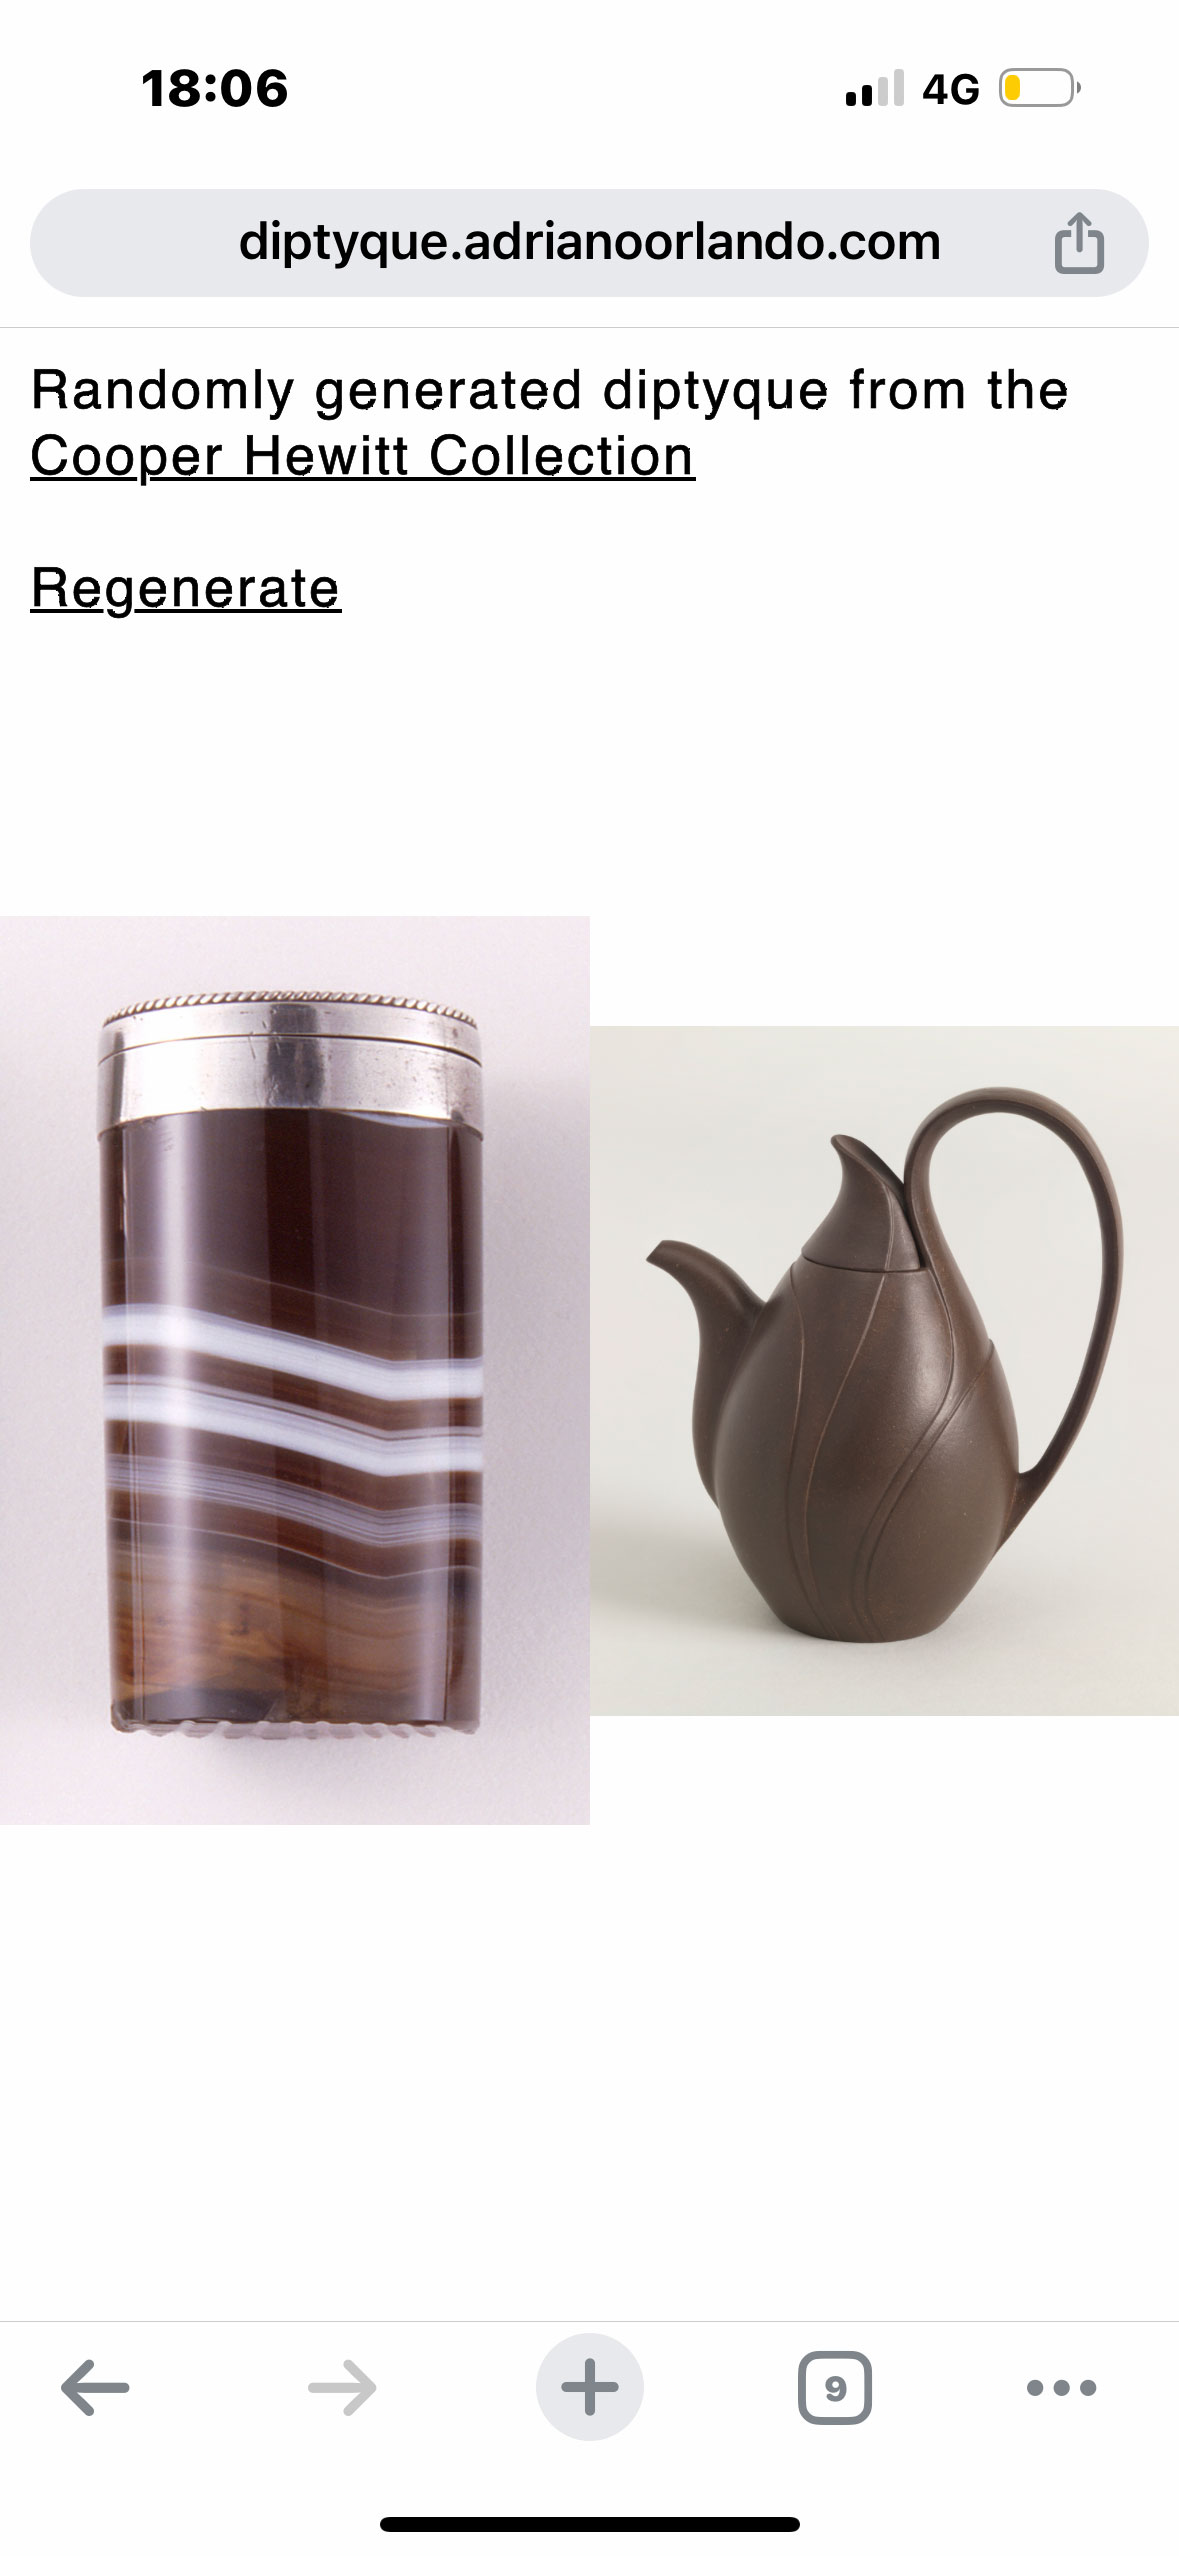 Diptyque web application by Adriano Orlando. Vase and jug screenshot.